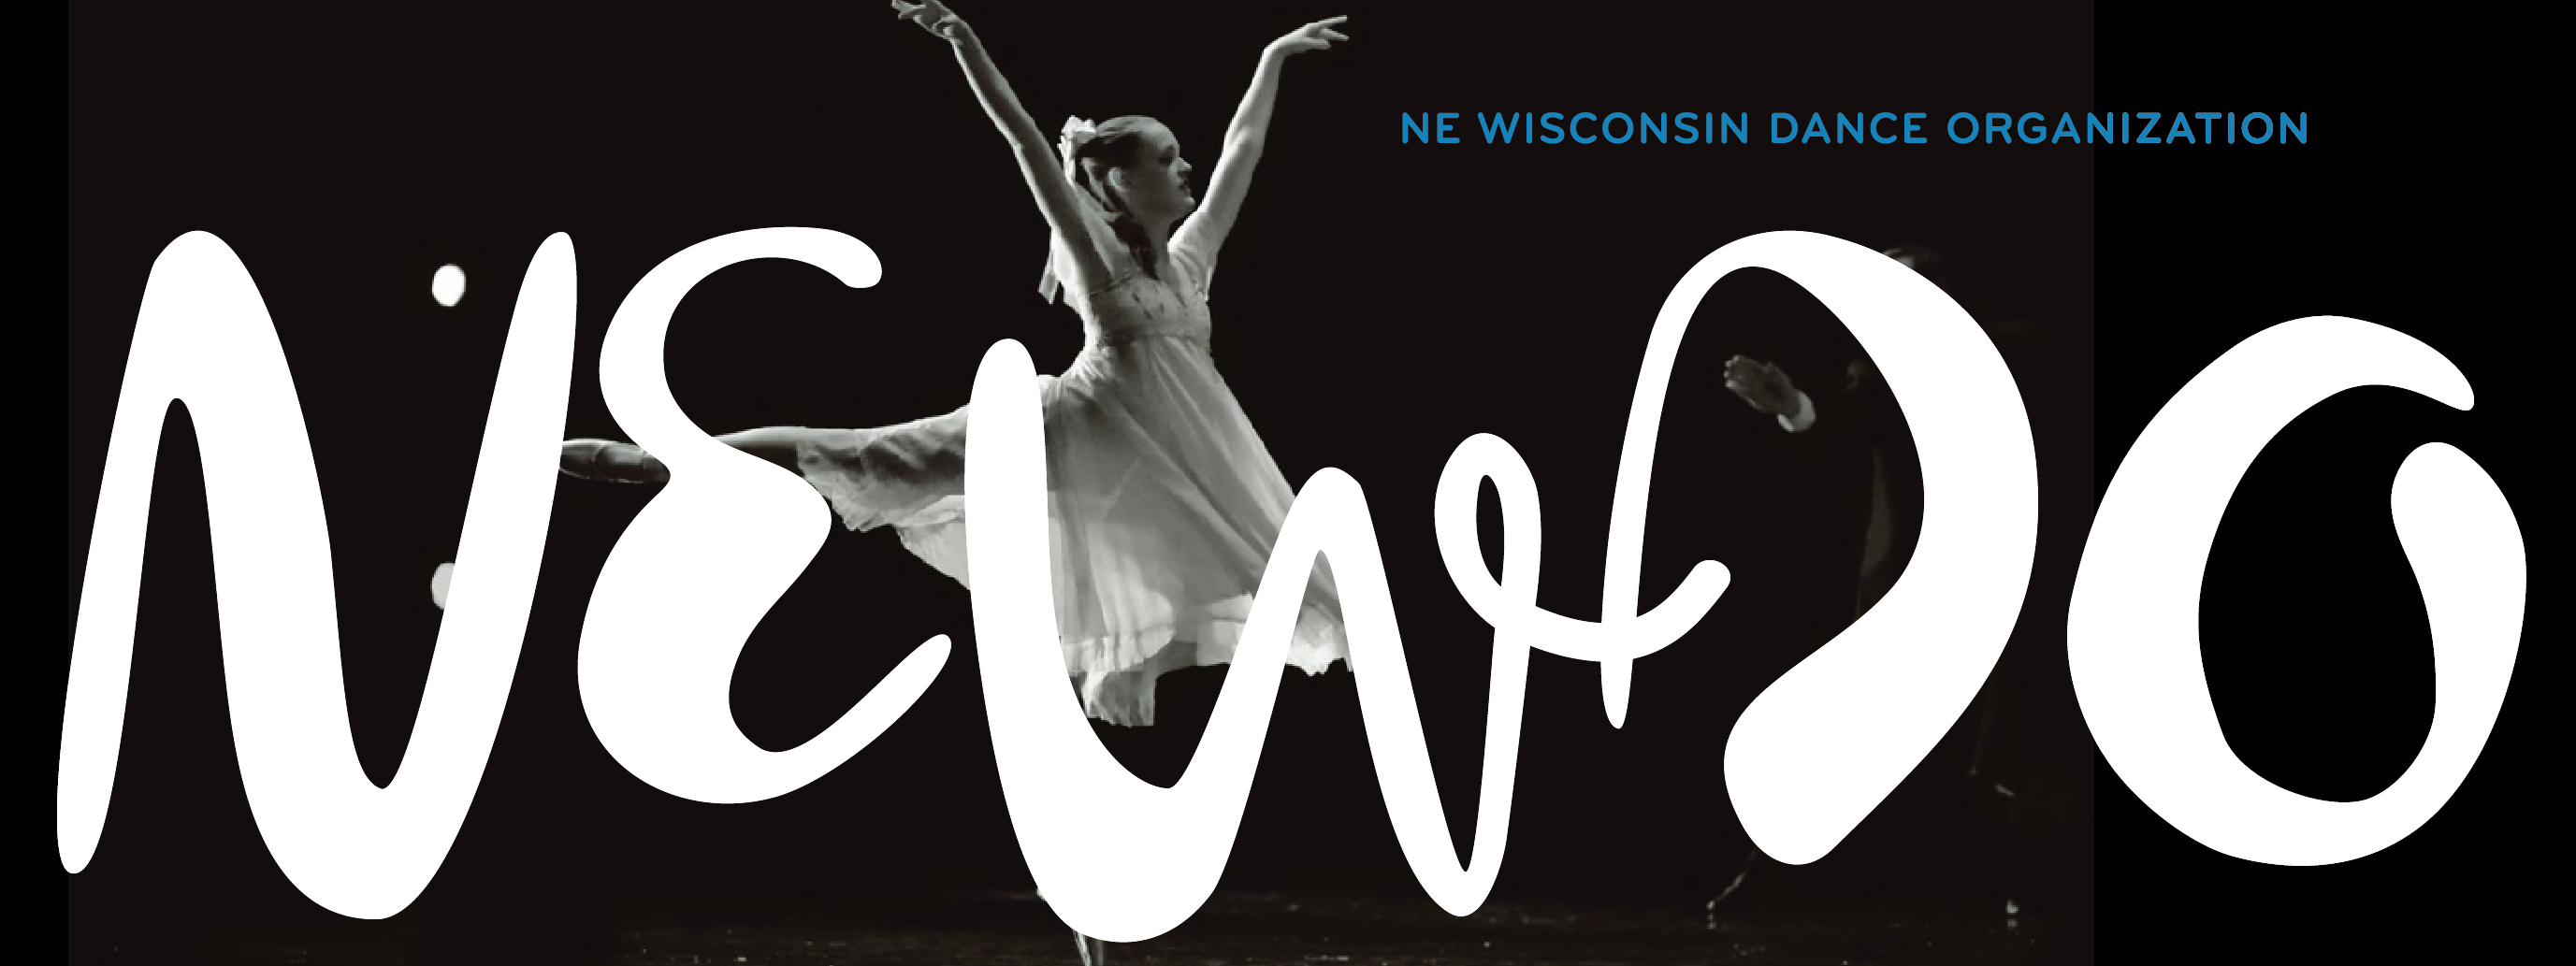 Northeast Wisconsin Dance Organization logo